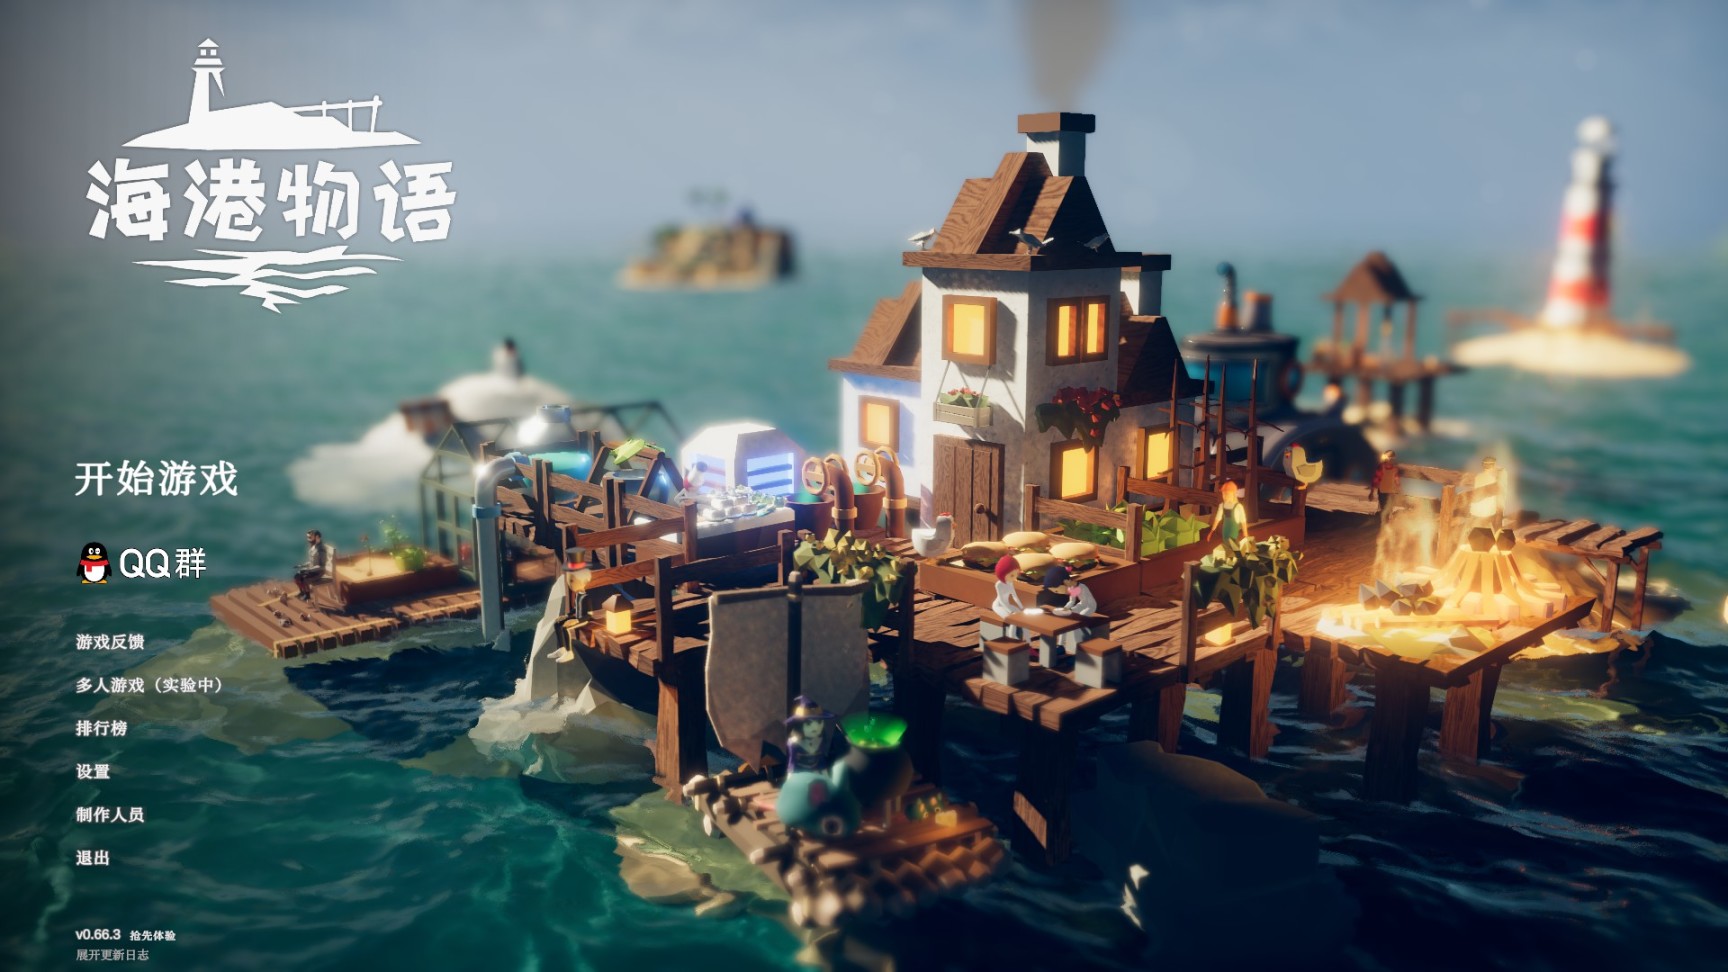 【PC游戏】捡捡就能创造的文明城镇《海港物语》-第0张